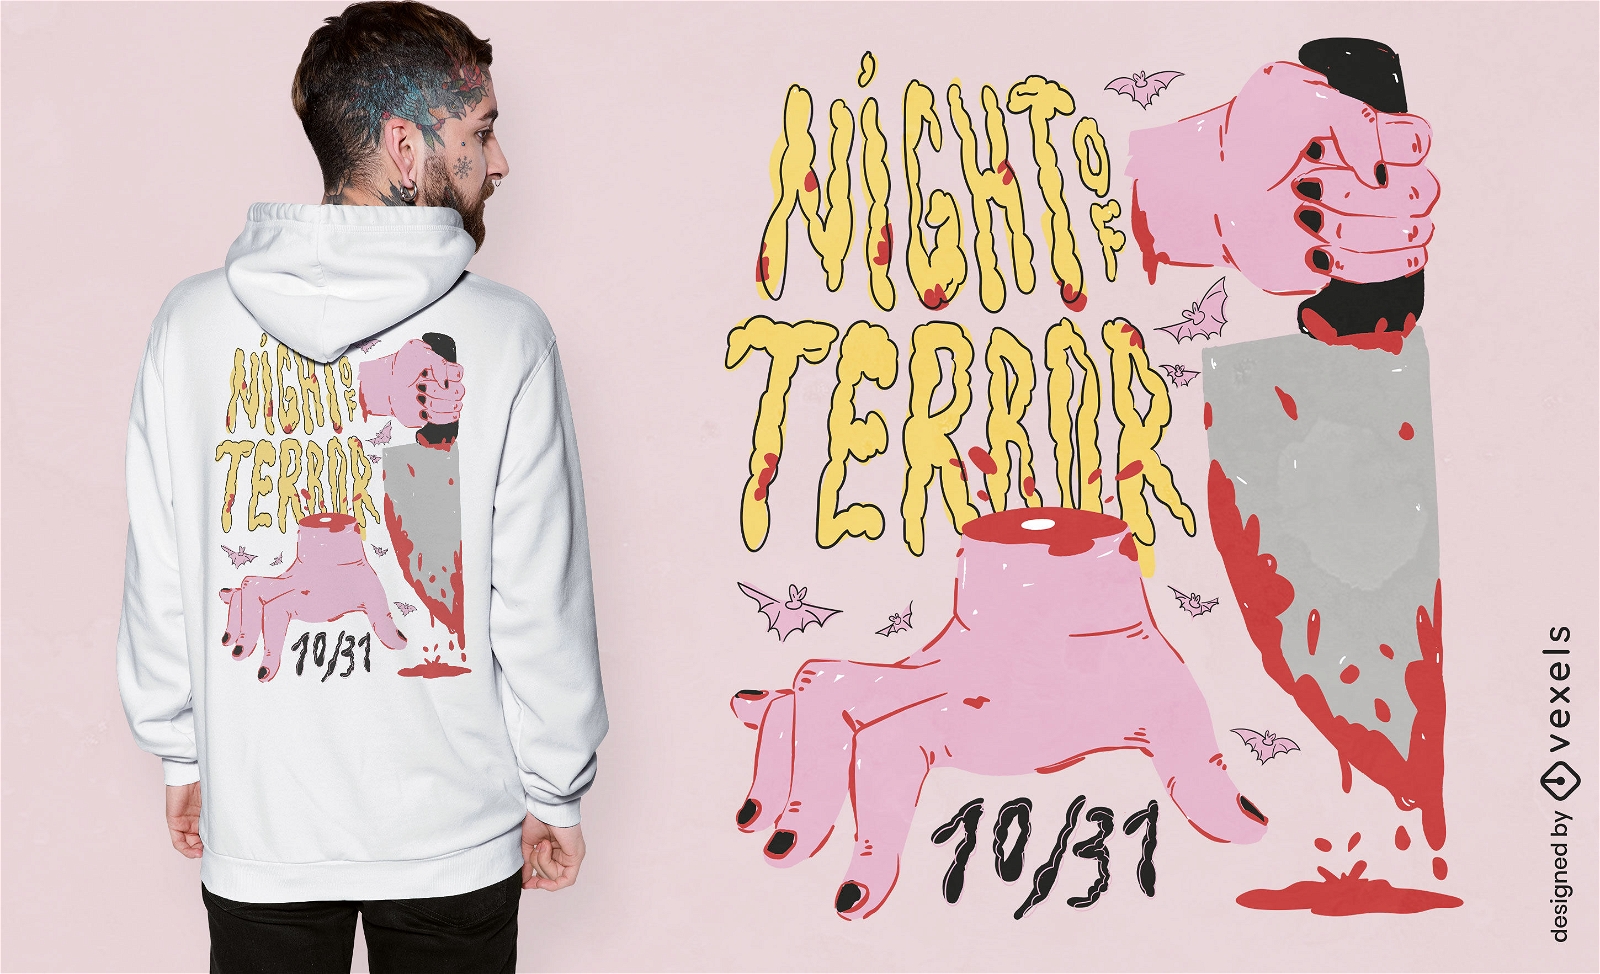 Night of terror bloody t-shirt design